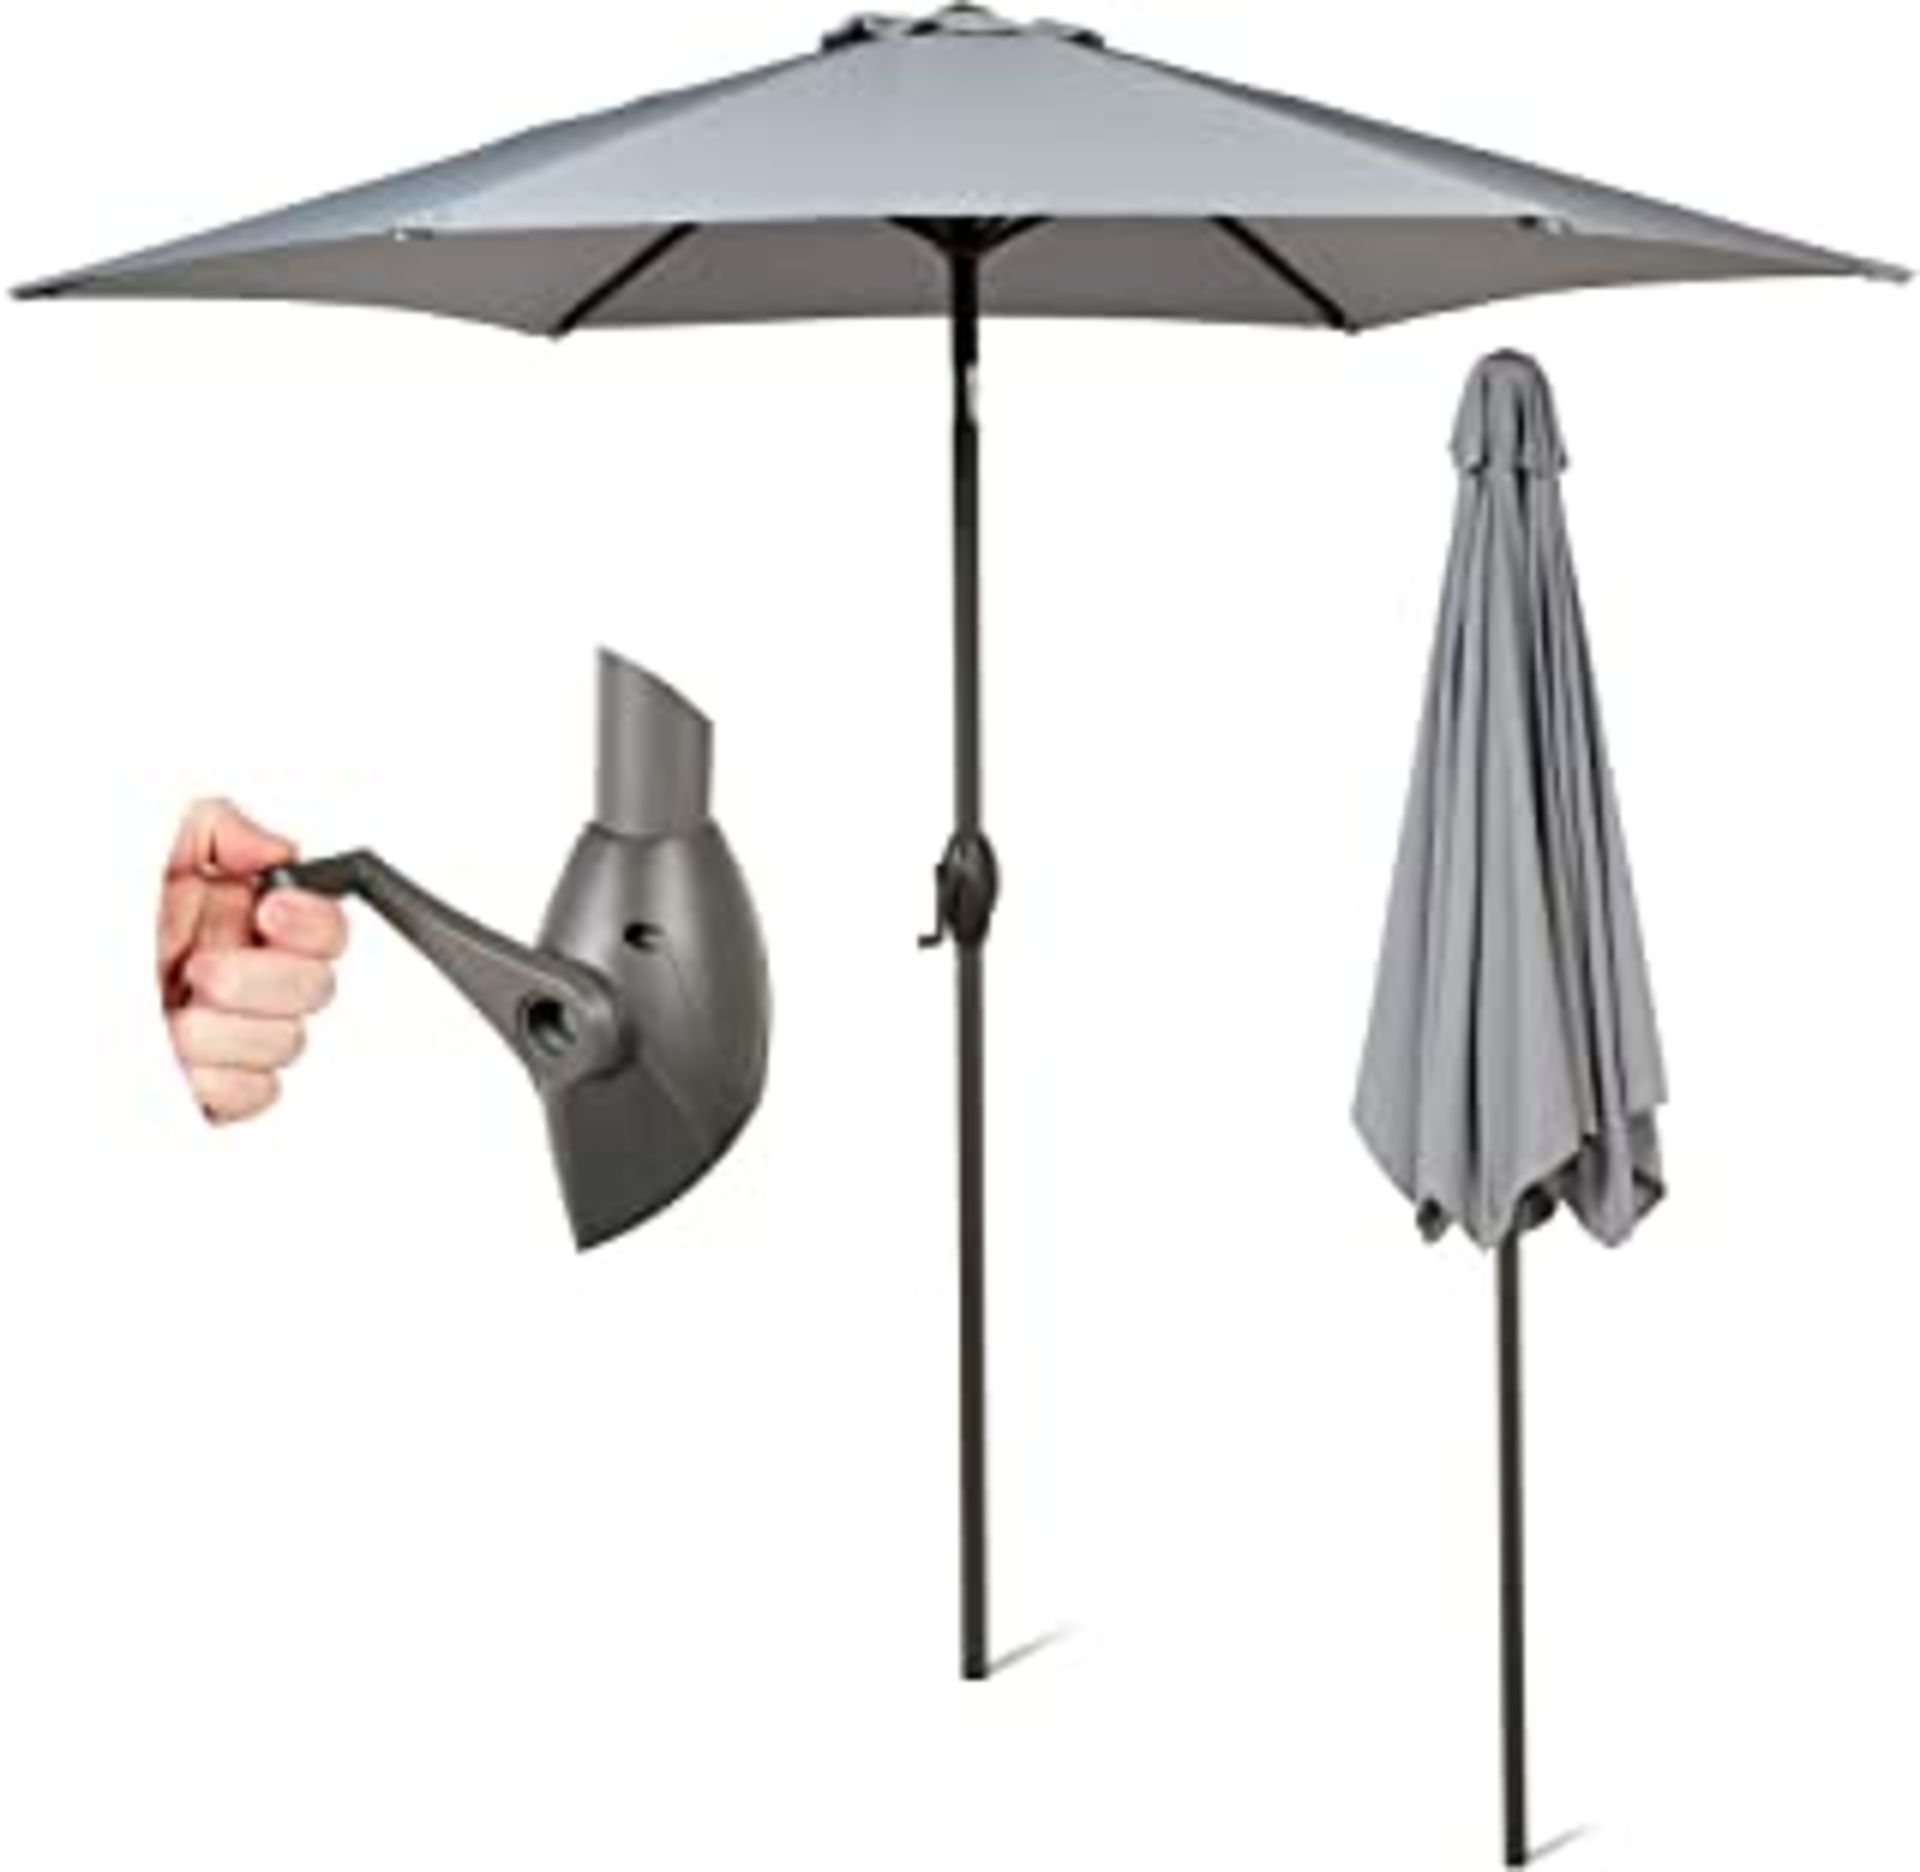 * 1x Grey Middle Pole Umbrella with Parasol Base. Parasol 2.7m Diameter. Steel Frame. 180g